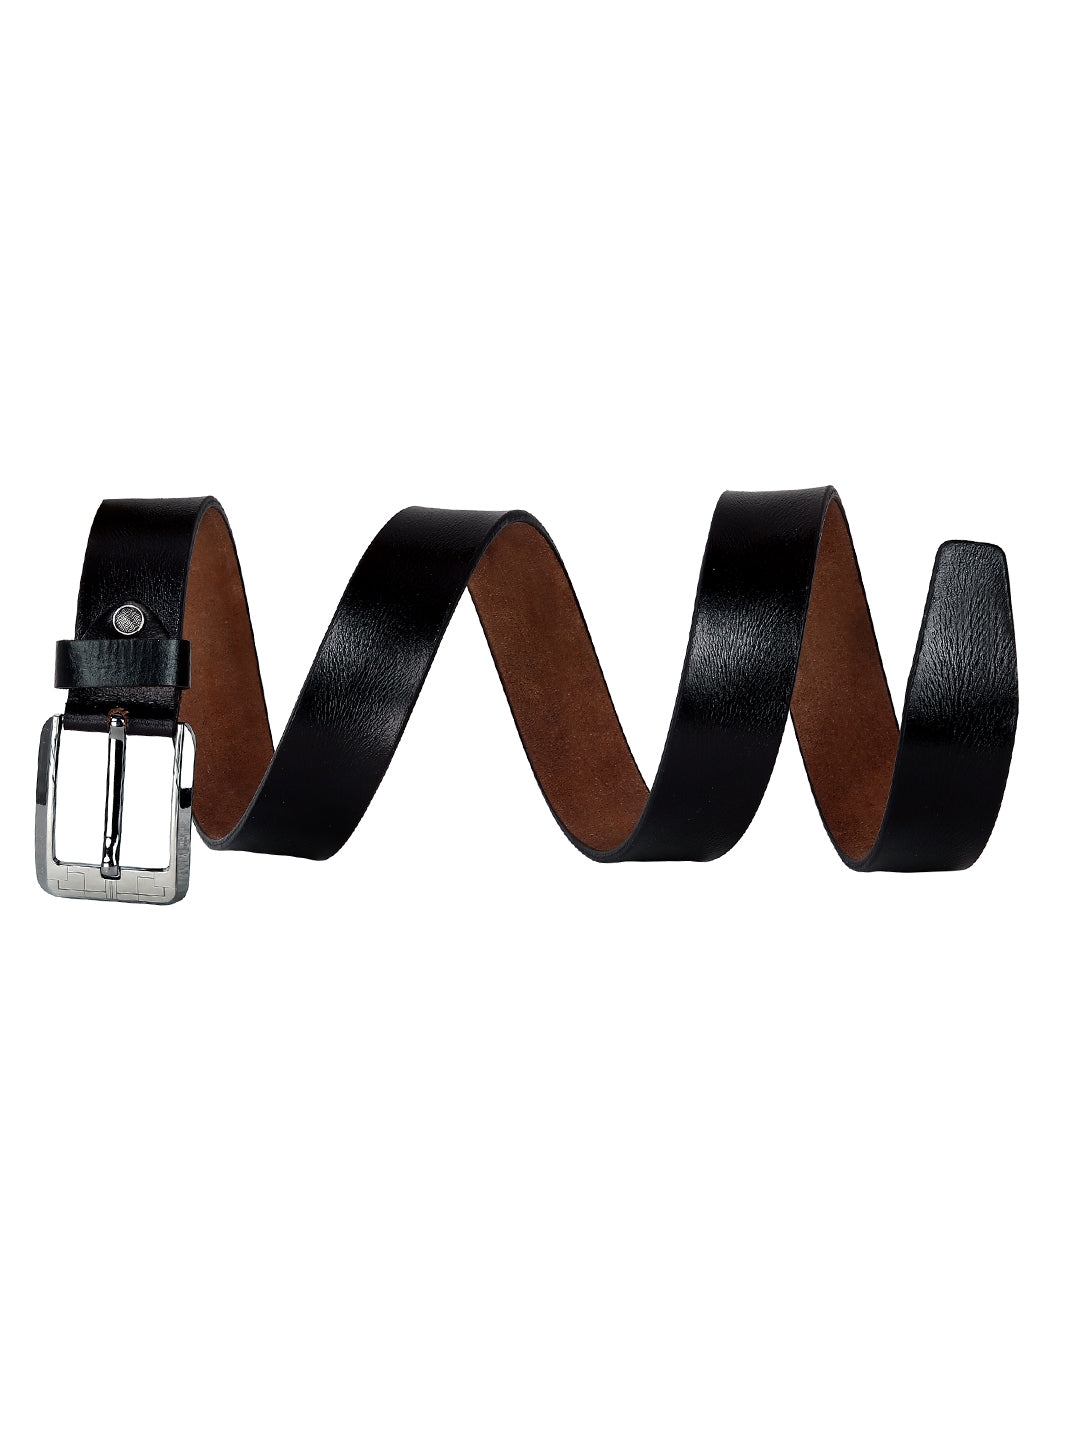 Leather World Formal Casual Black Color Branded Stylish Genuine Leather Belts For Men